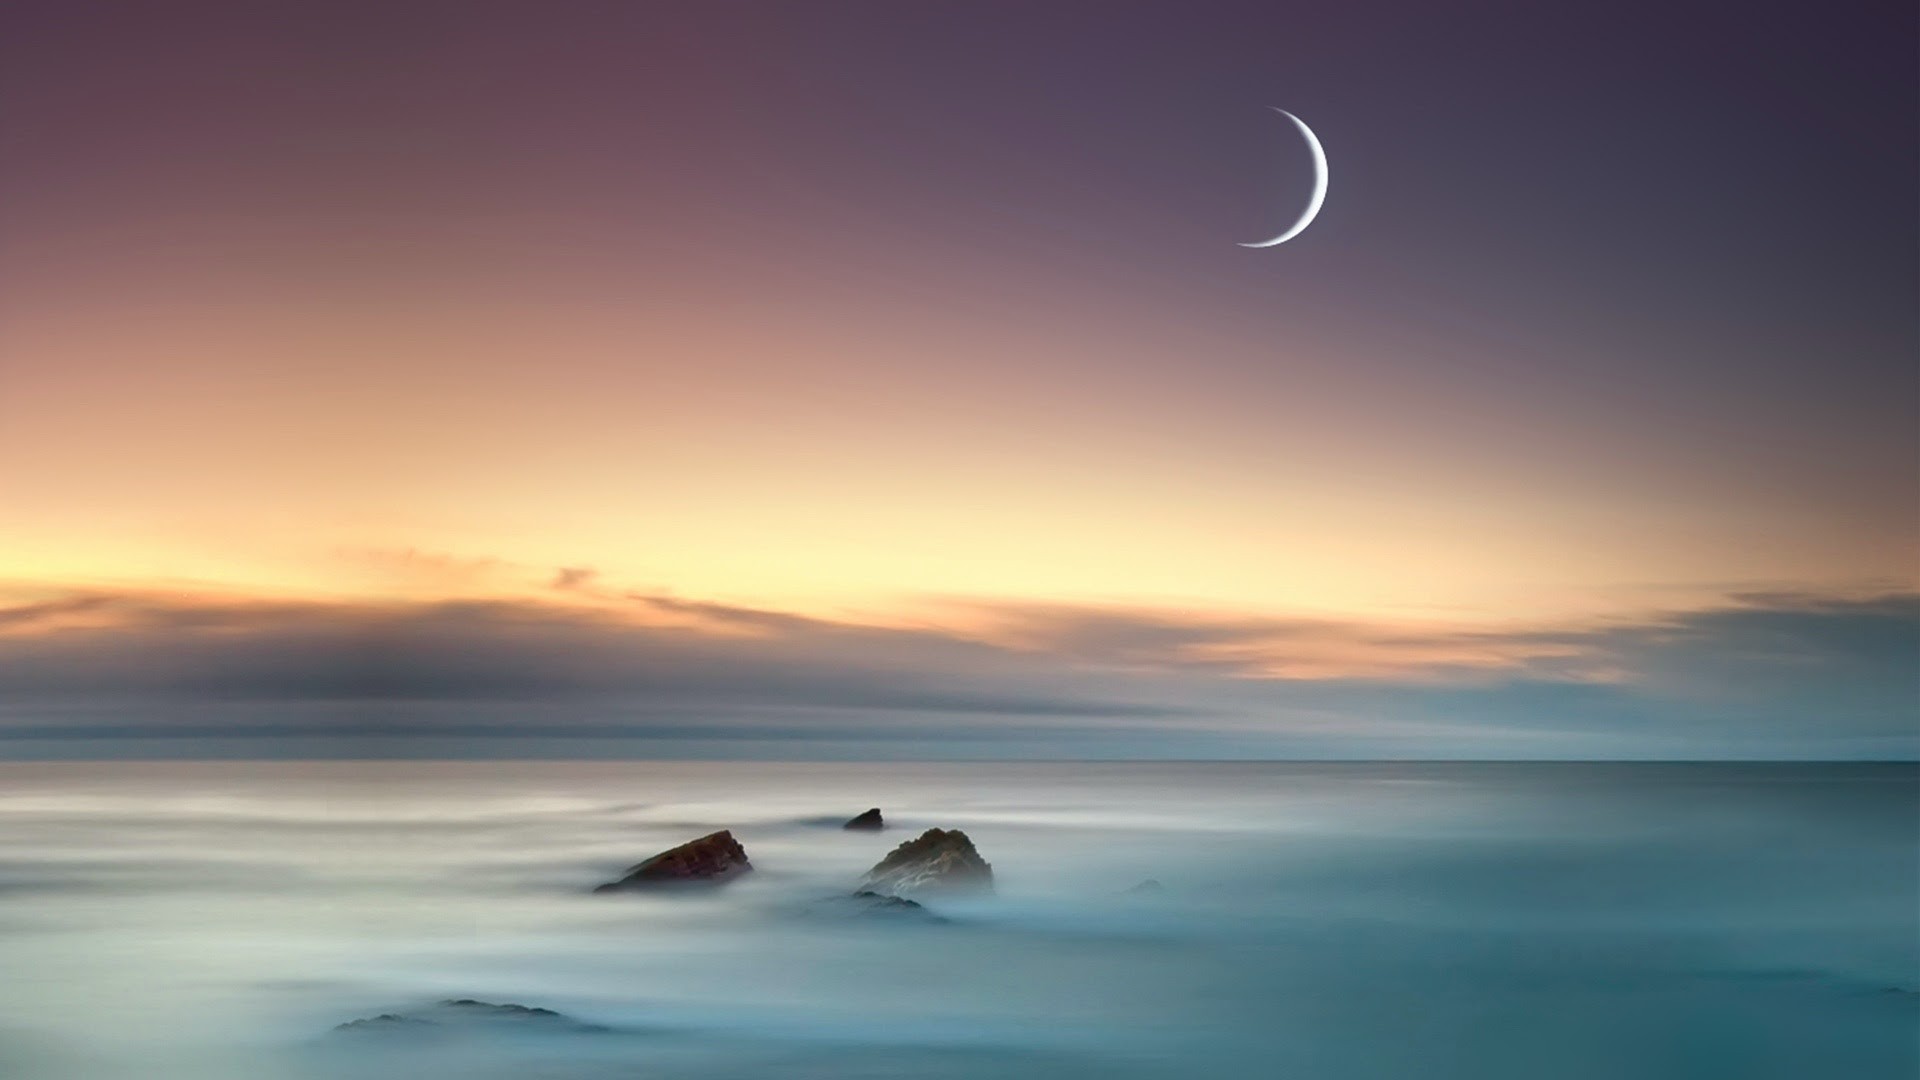 General 1920x1080 sea moonlight Moon crescent moon mist calm clouds horizon rocks yellow calm waters nature